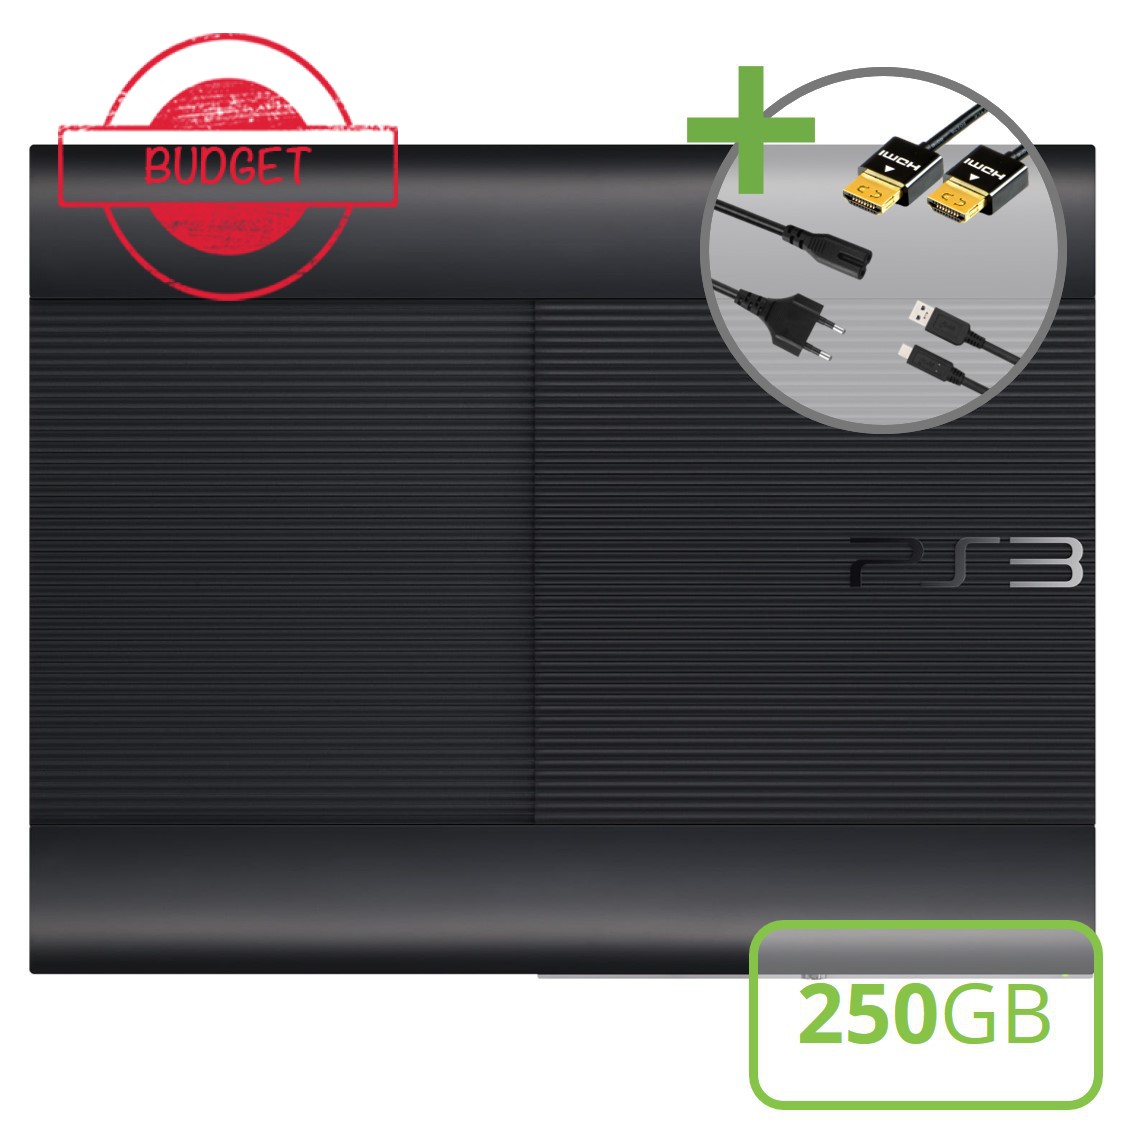 Sony PlayStation 3 Super Slim (250GB) Starter Pack - DualShock Edition - Budget - Playstation 3 Hardware - 3